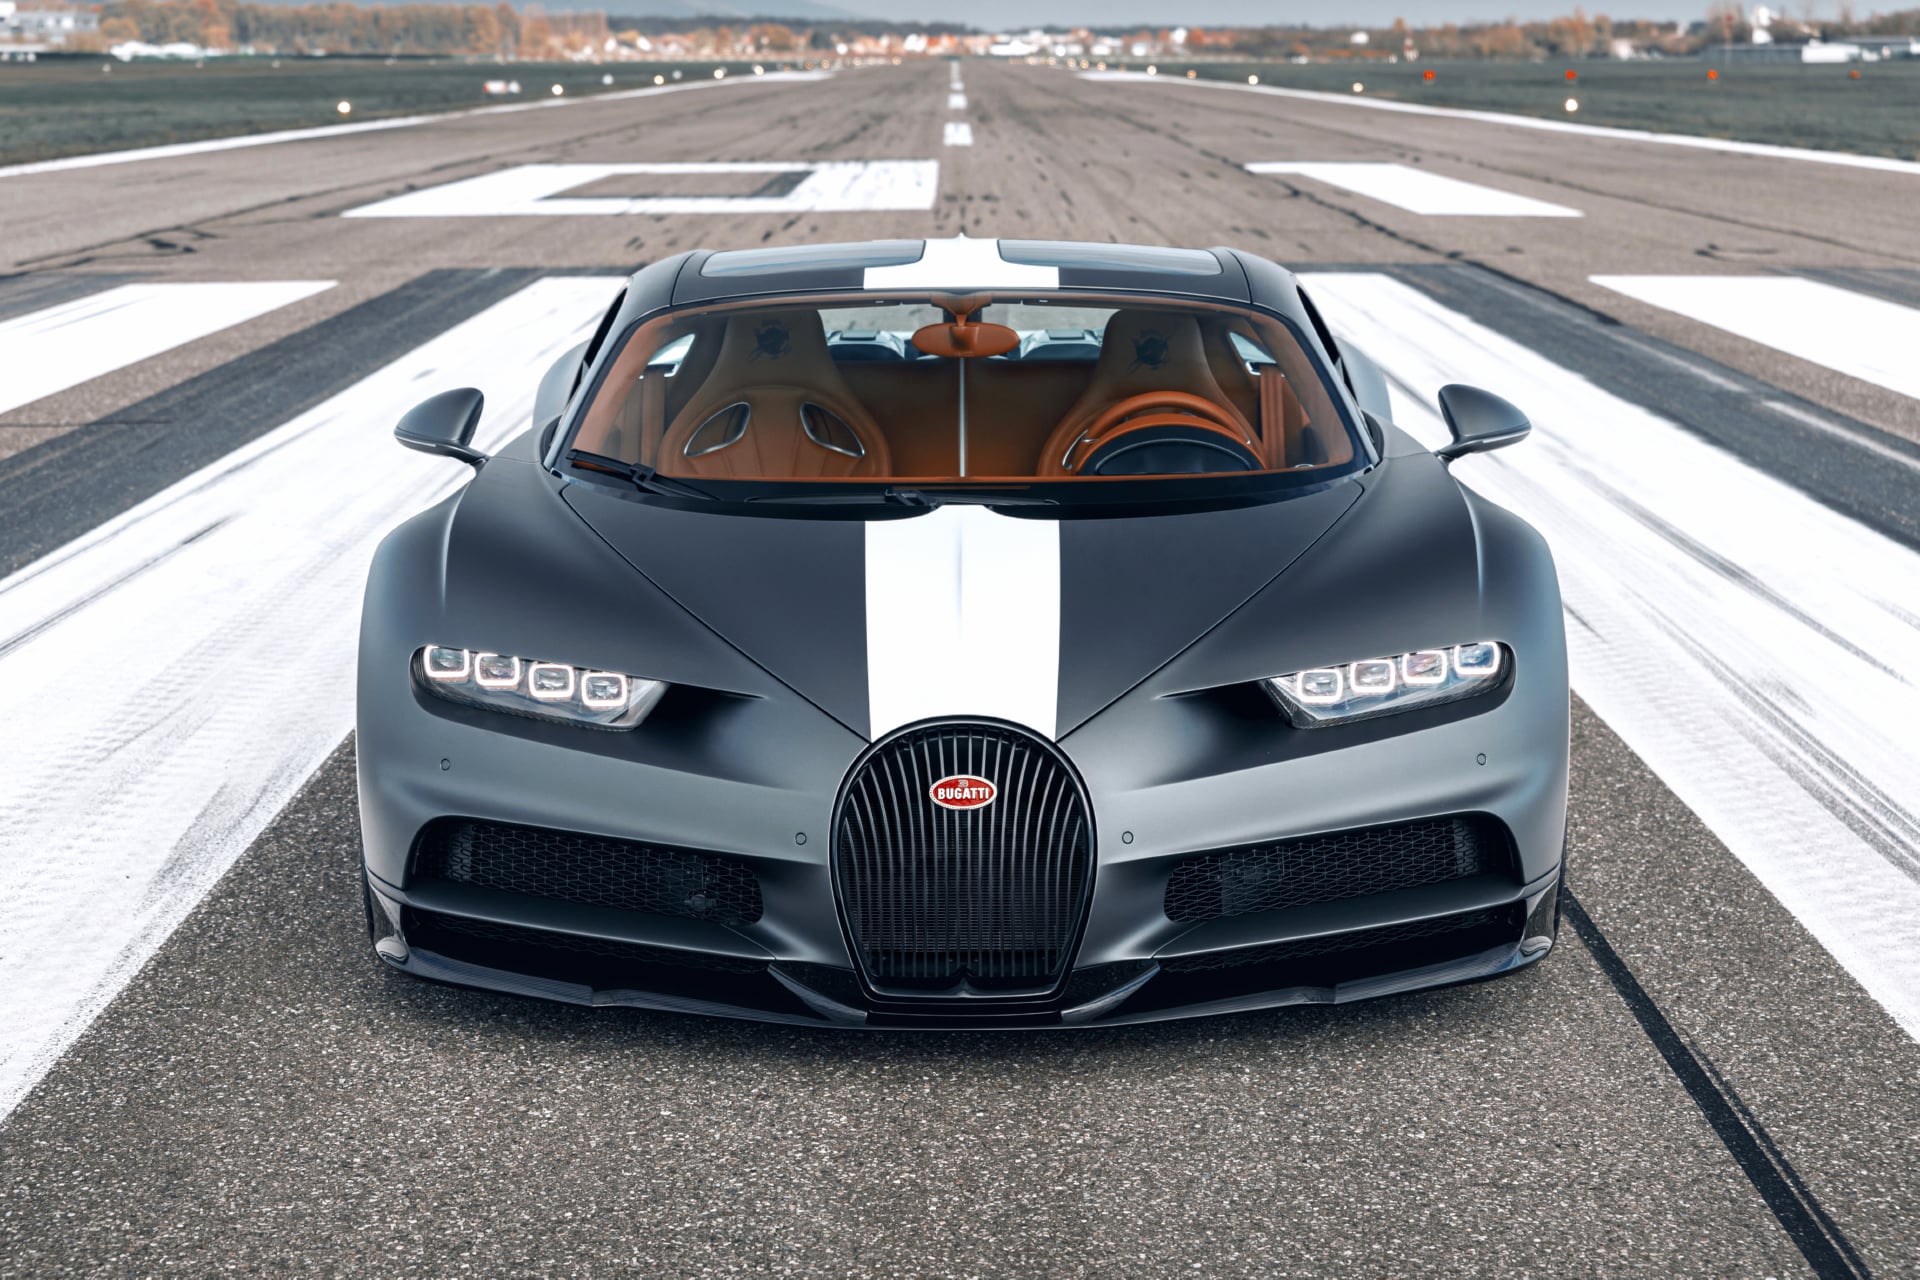 Bugatti Chiron Sport Les Légendes du Ciel at 1024 x 1024 iPad size wallpapers HD quality